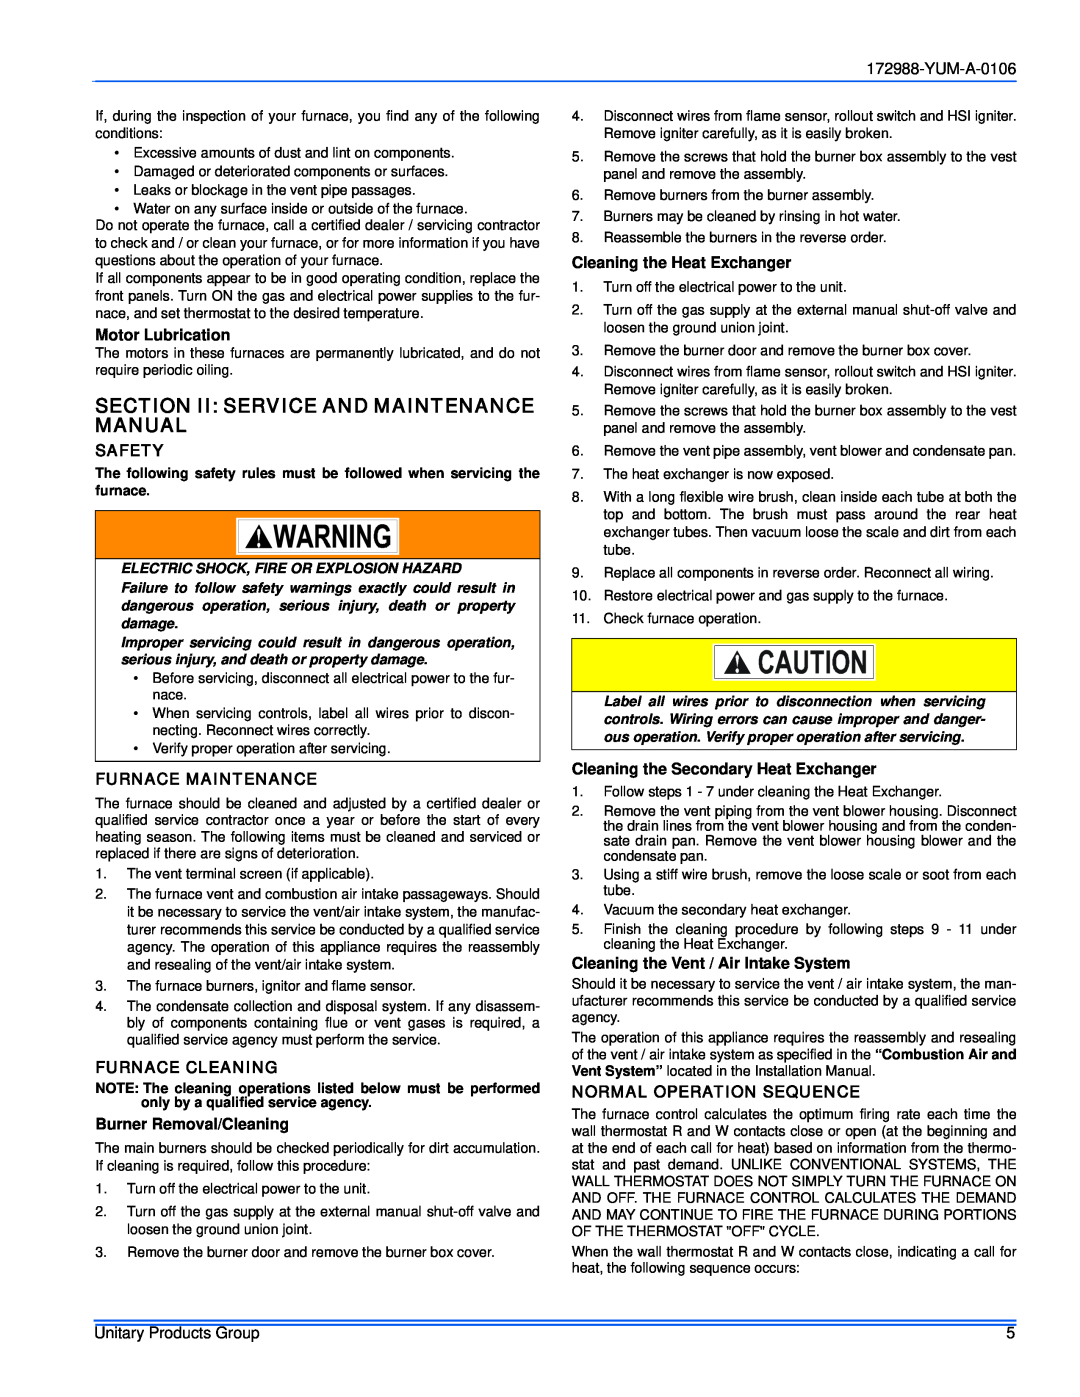 York PC9 Section Ii Service And Maintenance Manual, YUM-A-0106, Motor Lubrication, Safety, Furnace Maintenance 